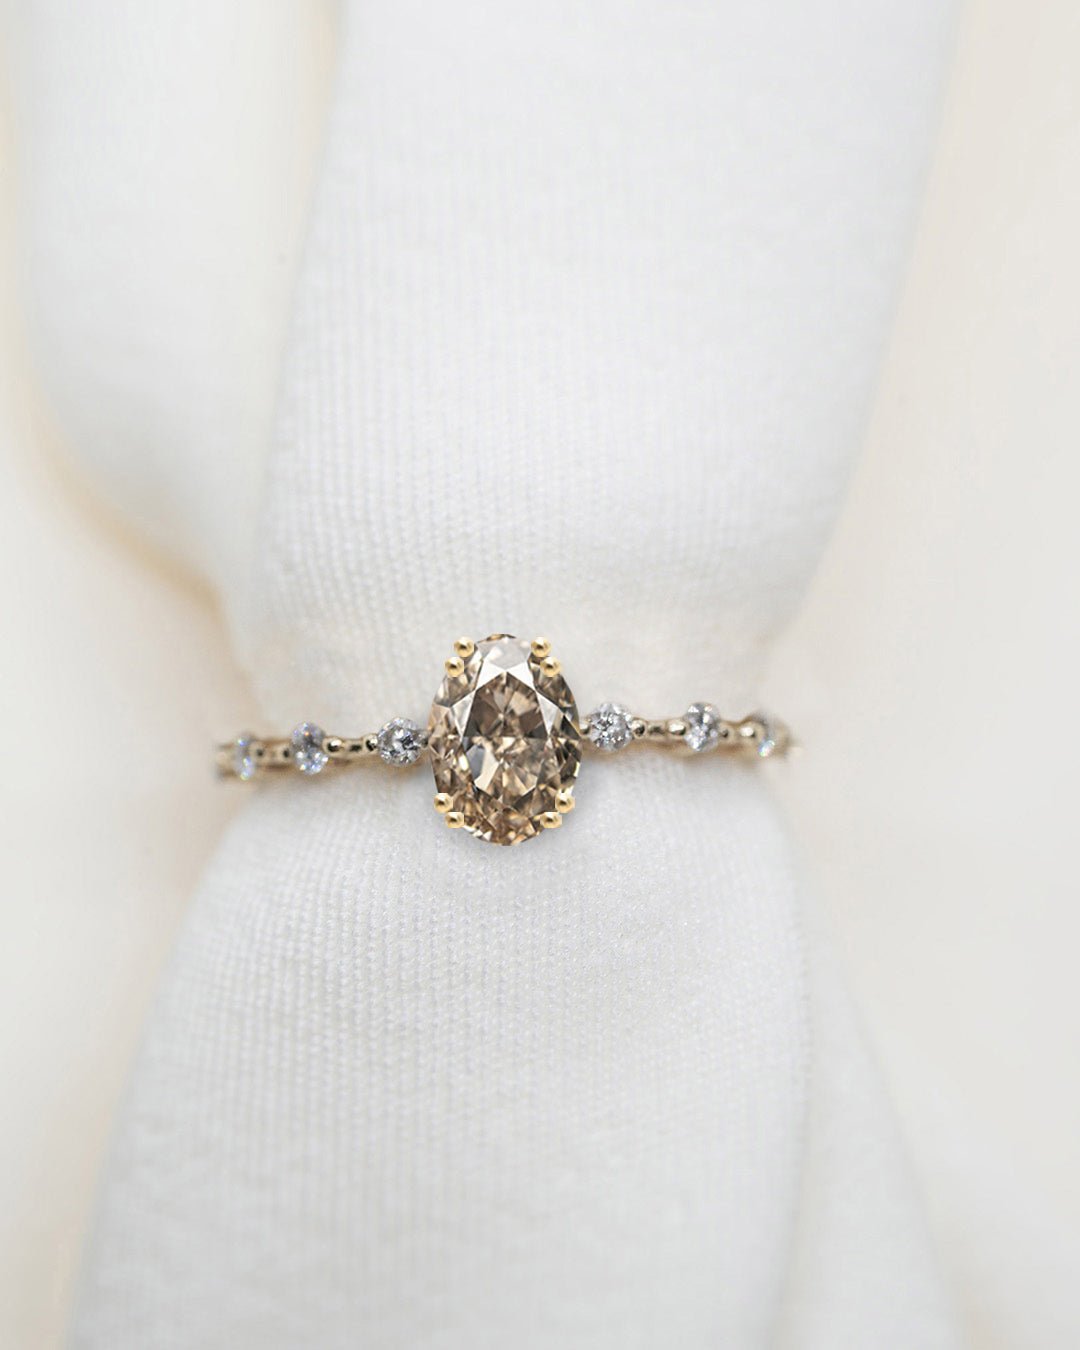 Champagne Oval Brilliant Cut 1.01ct Diamond - Lelya - bespoke engagement and wedding rings made in Scotland, UK